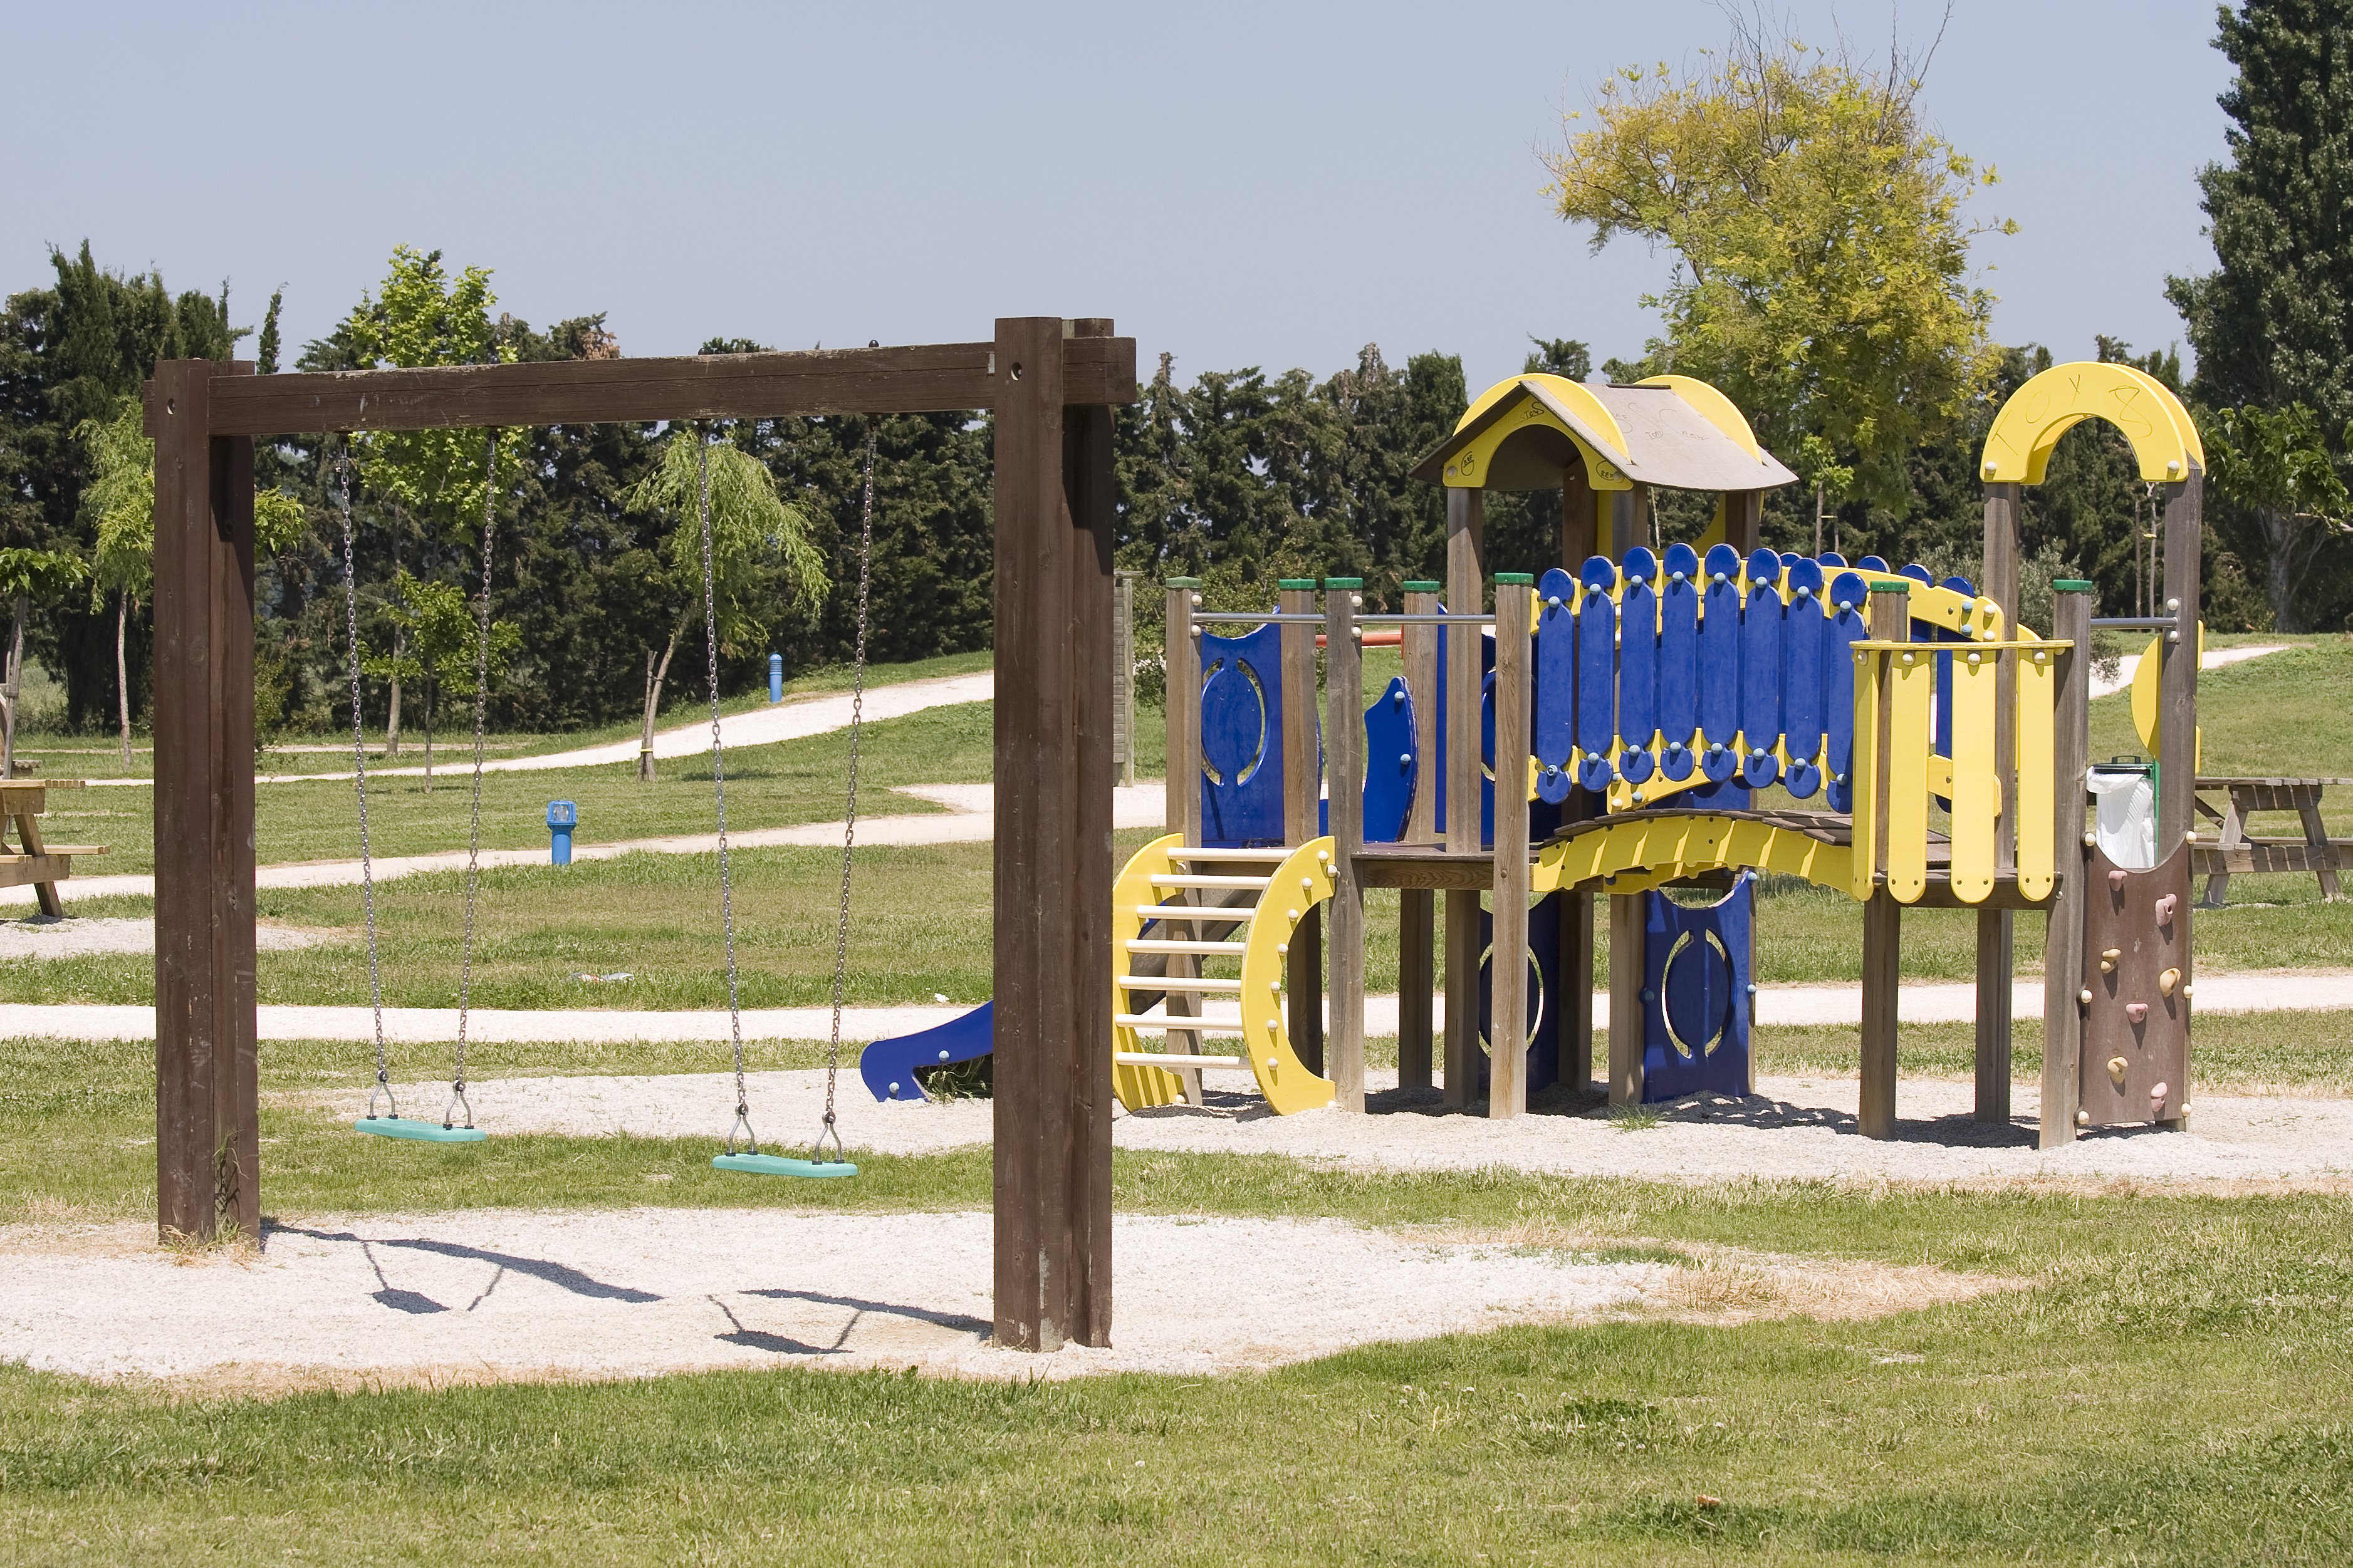 Parque infantil sin niños. | Foto: Shutterstock.